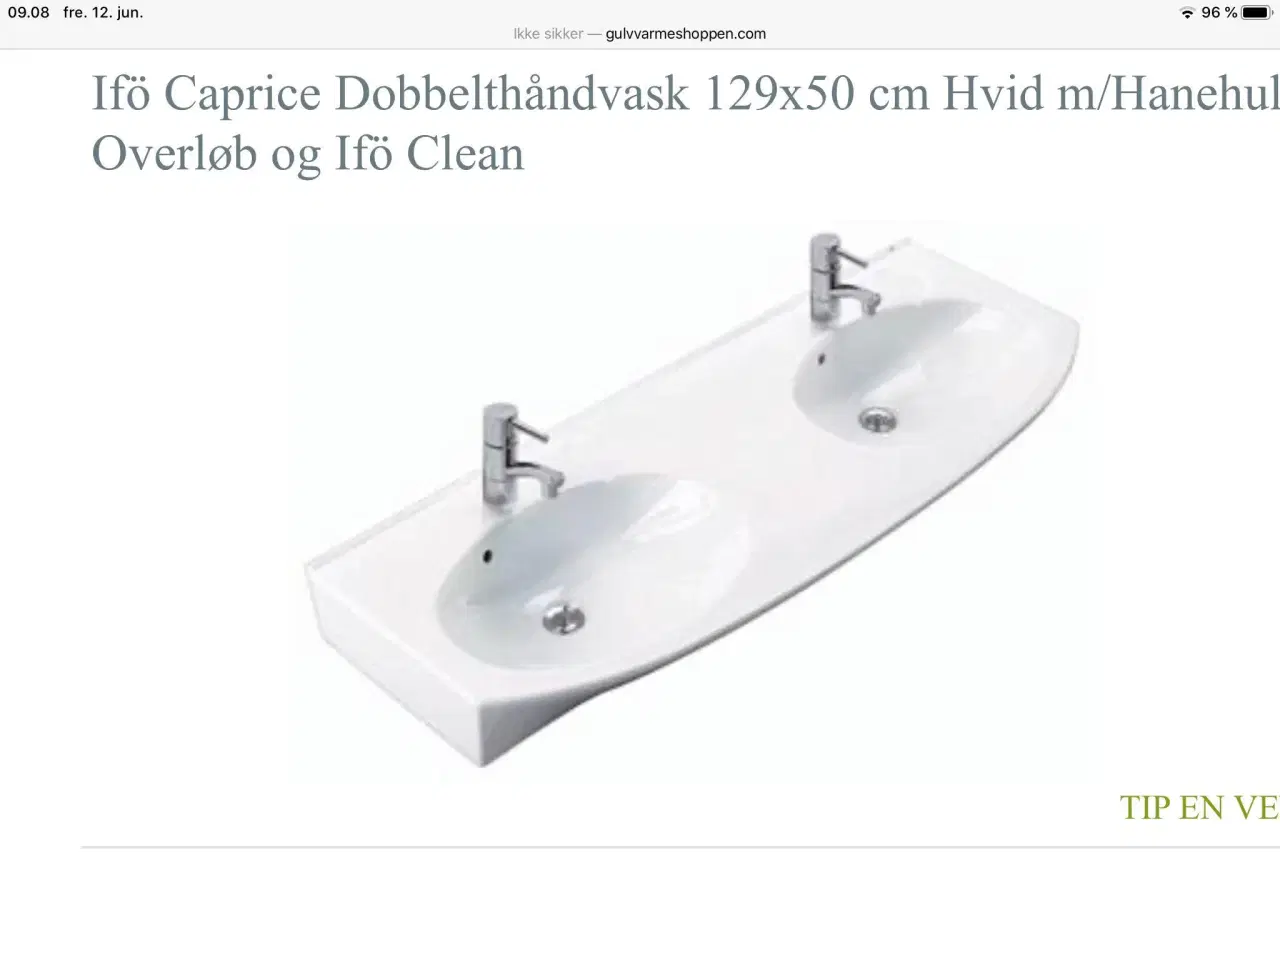 Billede 1 - Ifø Caprice dobbelt håndvask købes